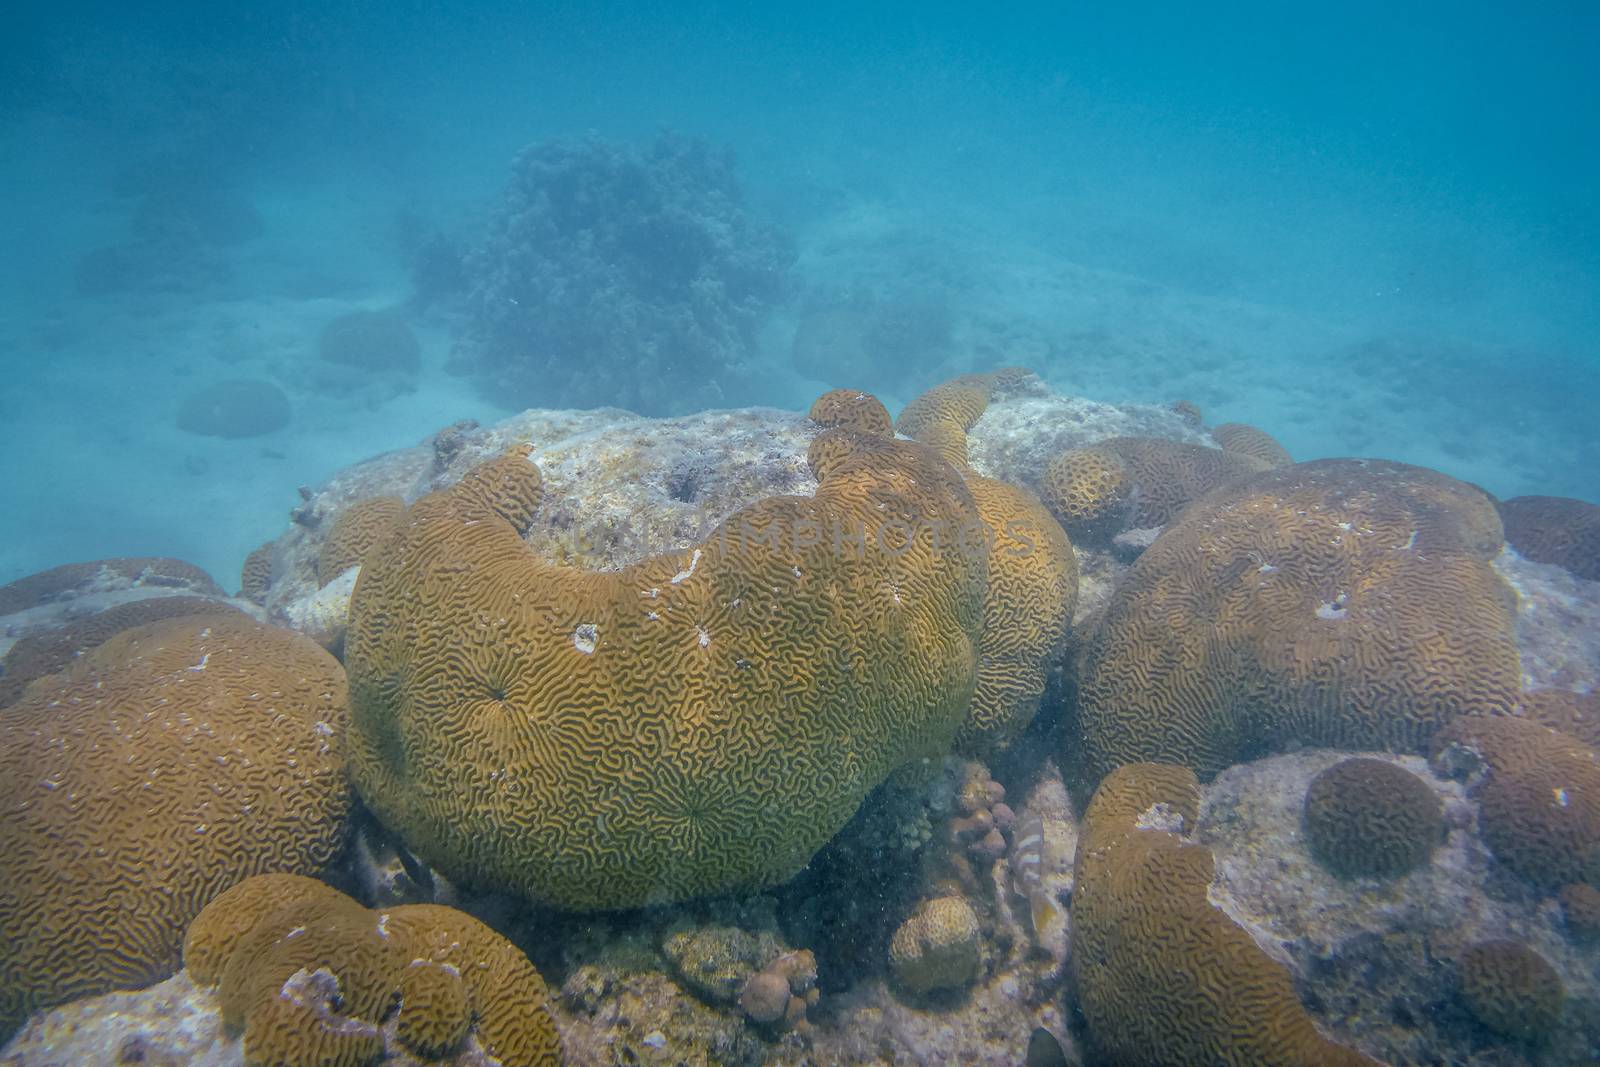 Ningaloo reef corals at marine life at Coral Bay in Western Australia